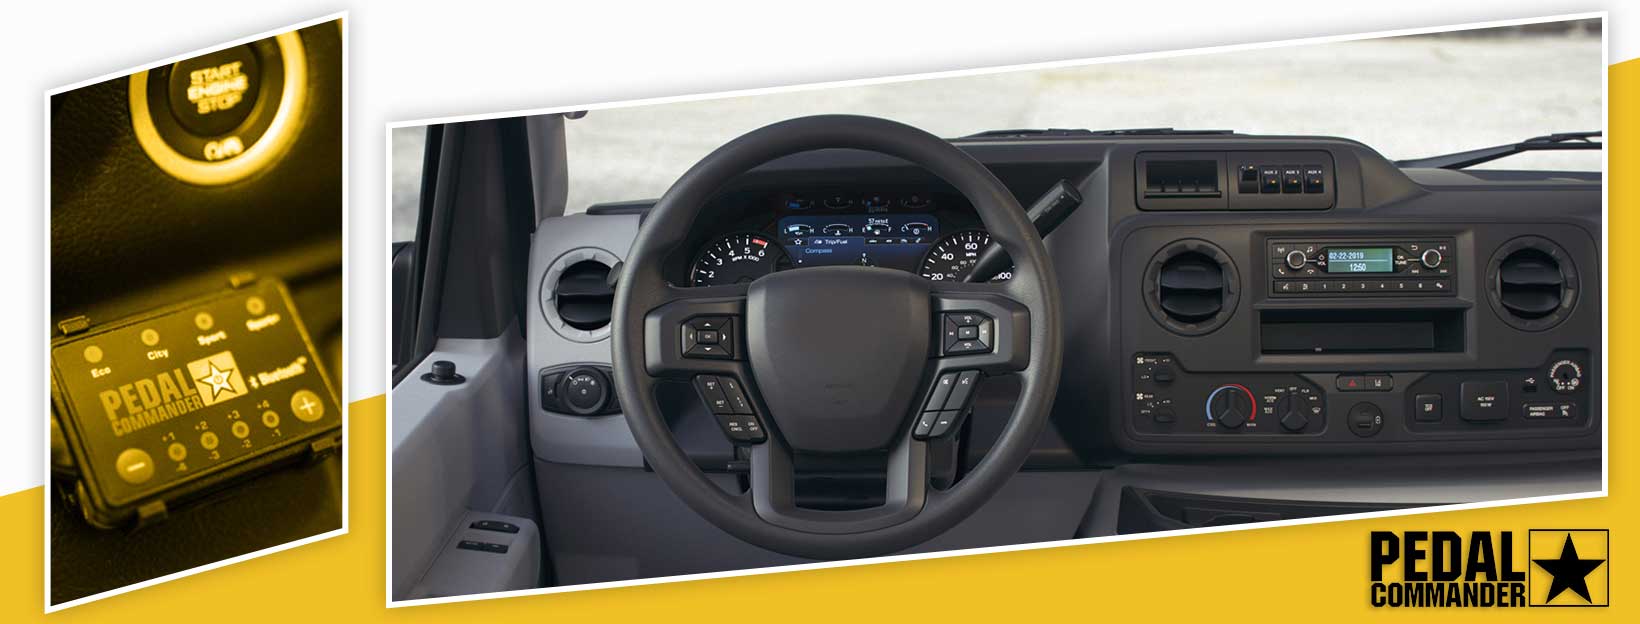 Pedal Commander for Ford E450 - interior